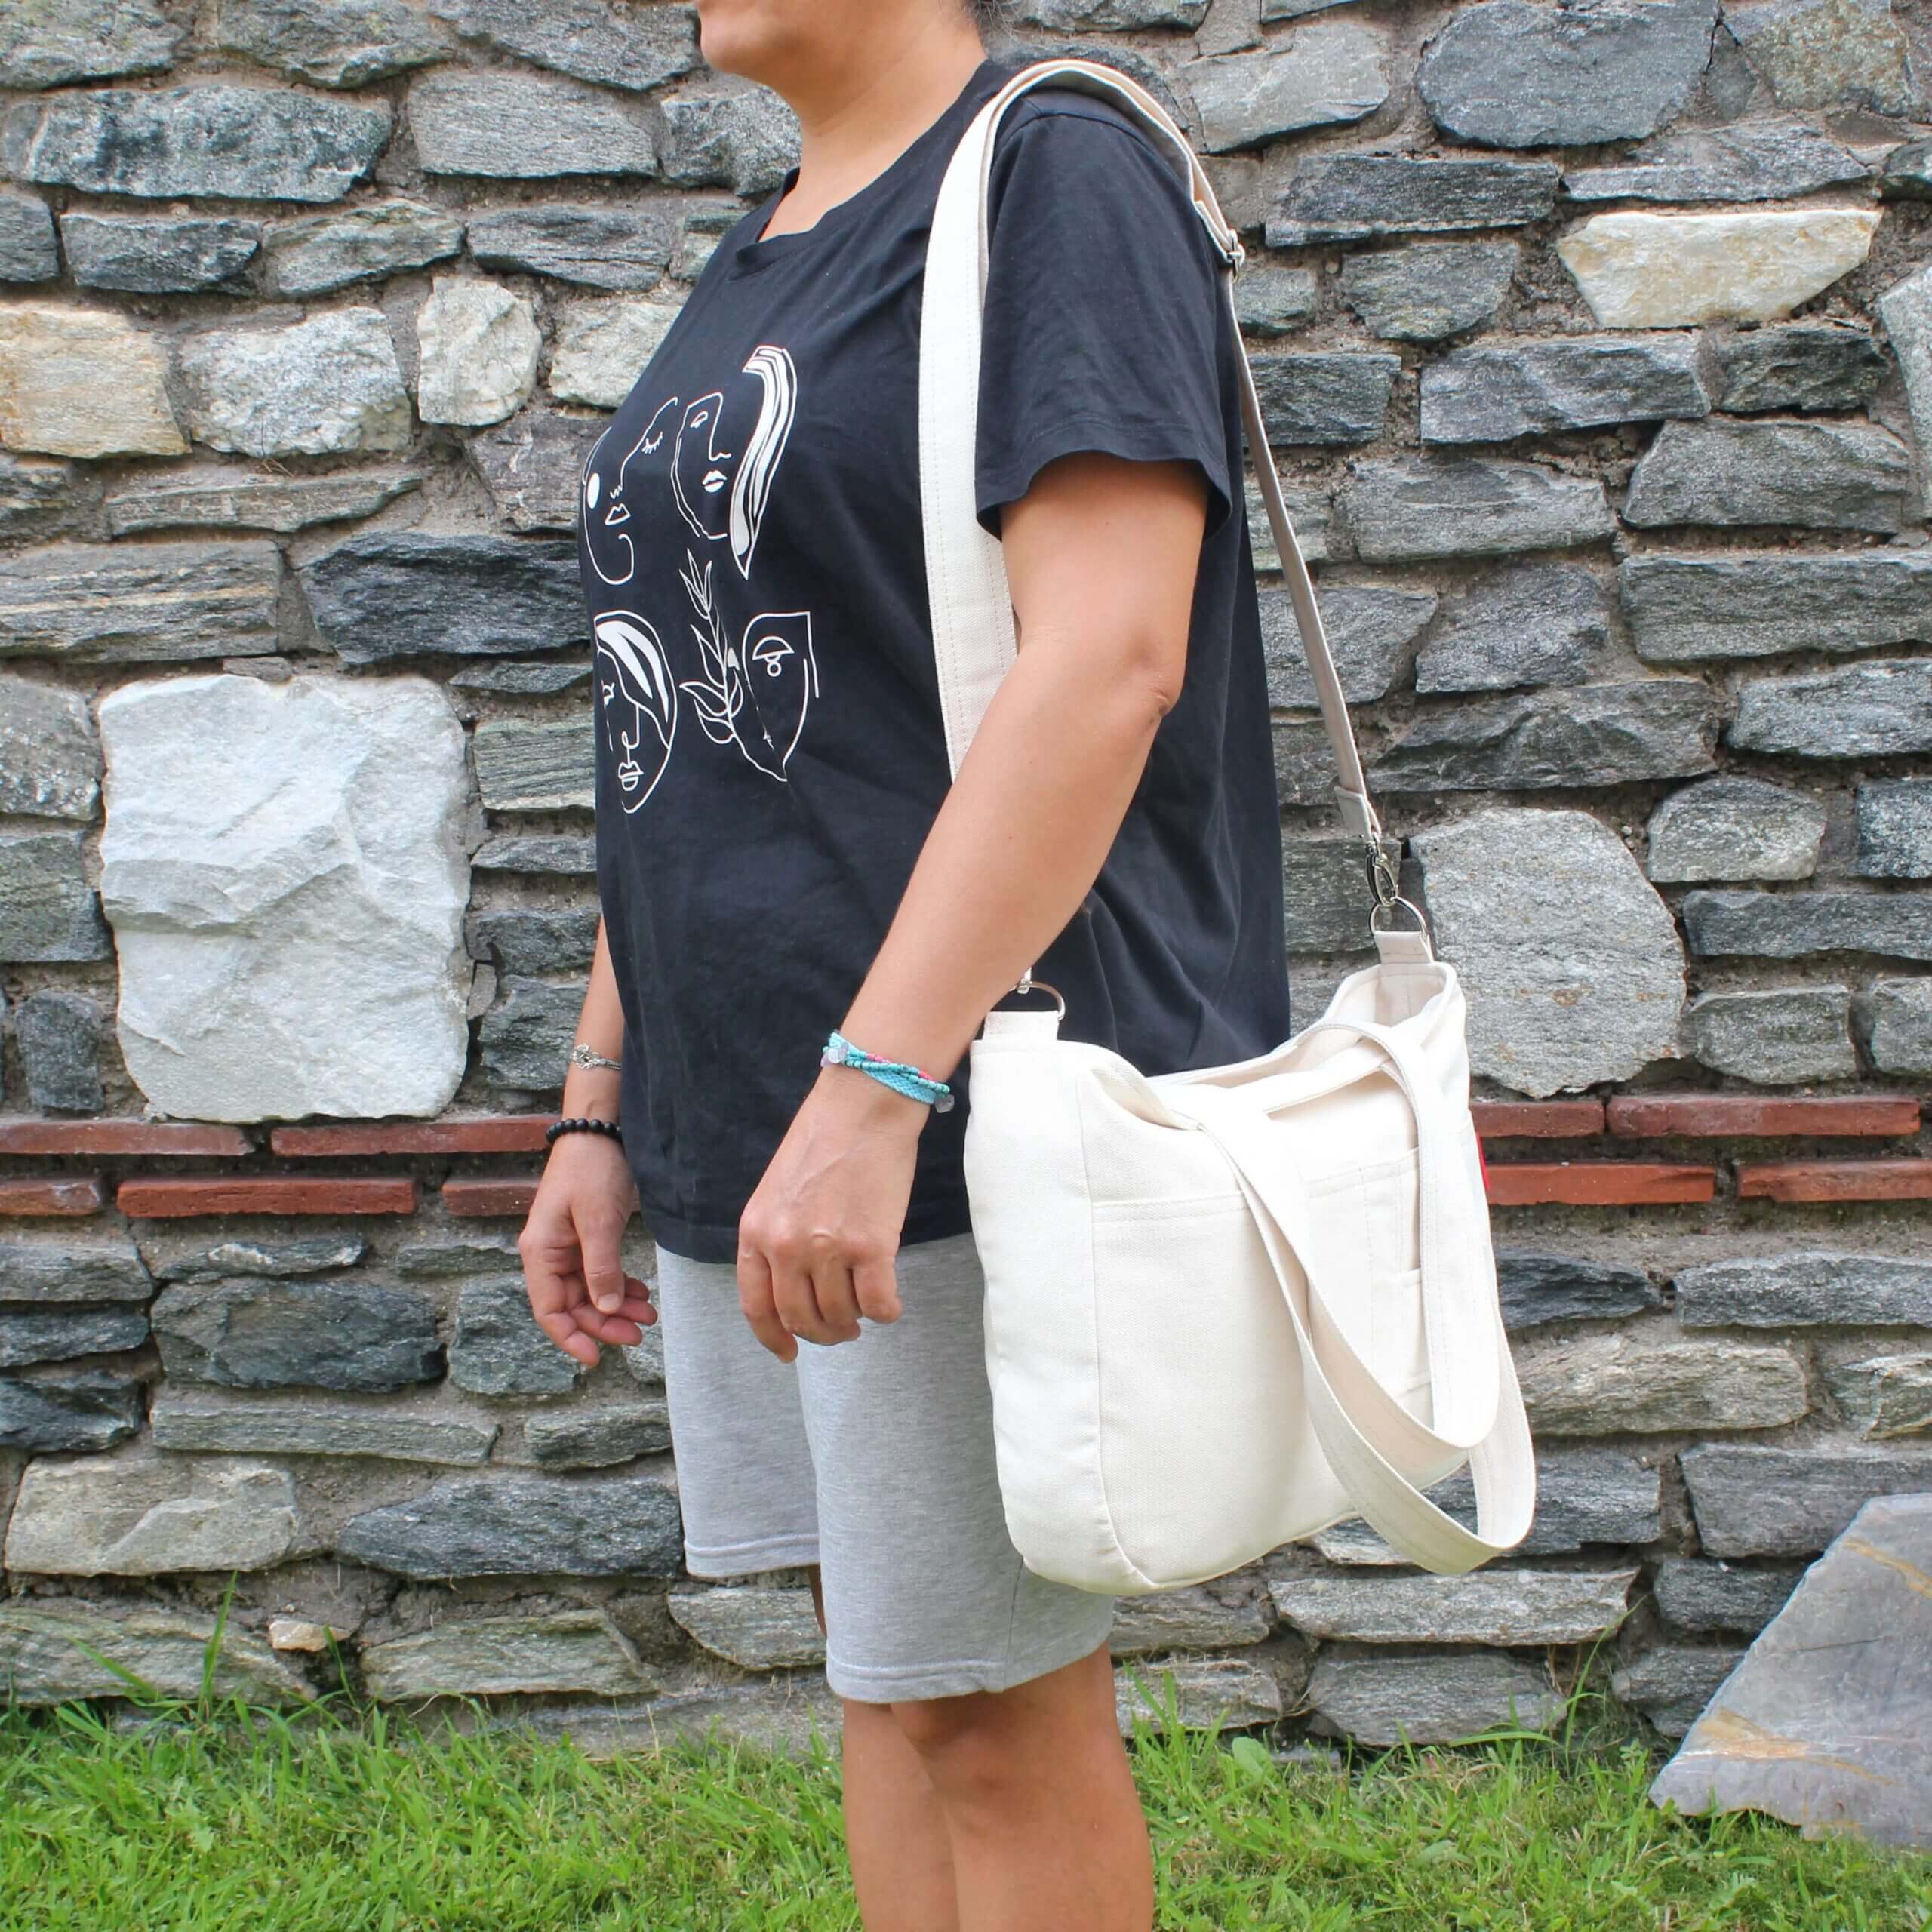 Canvas Tote - White Cotton Handbag